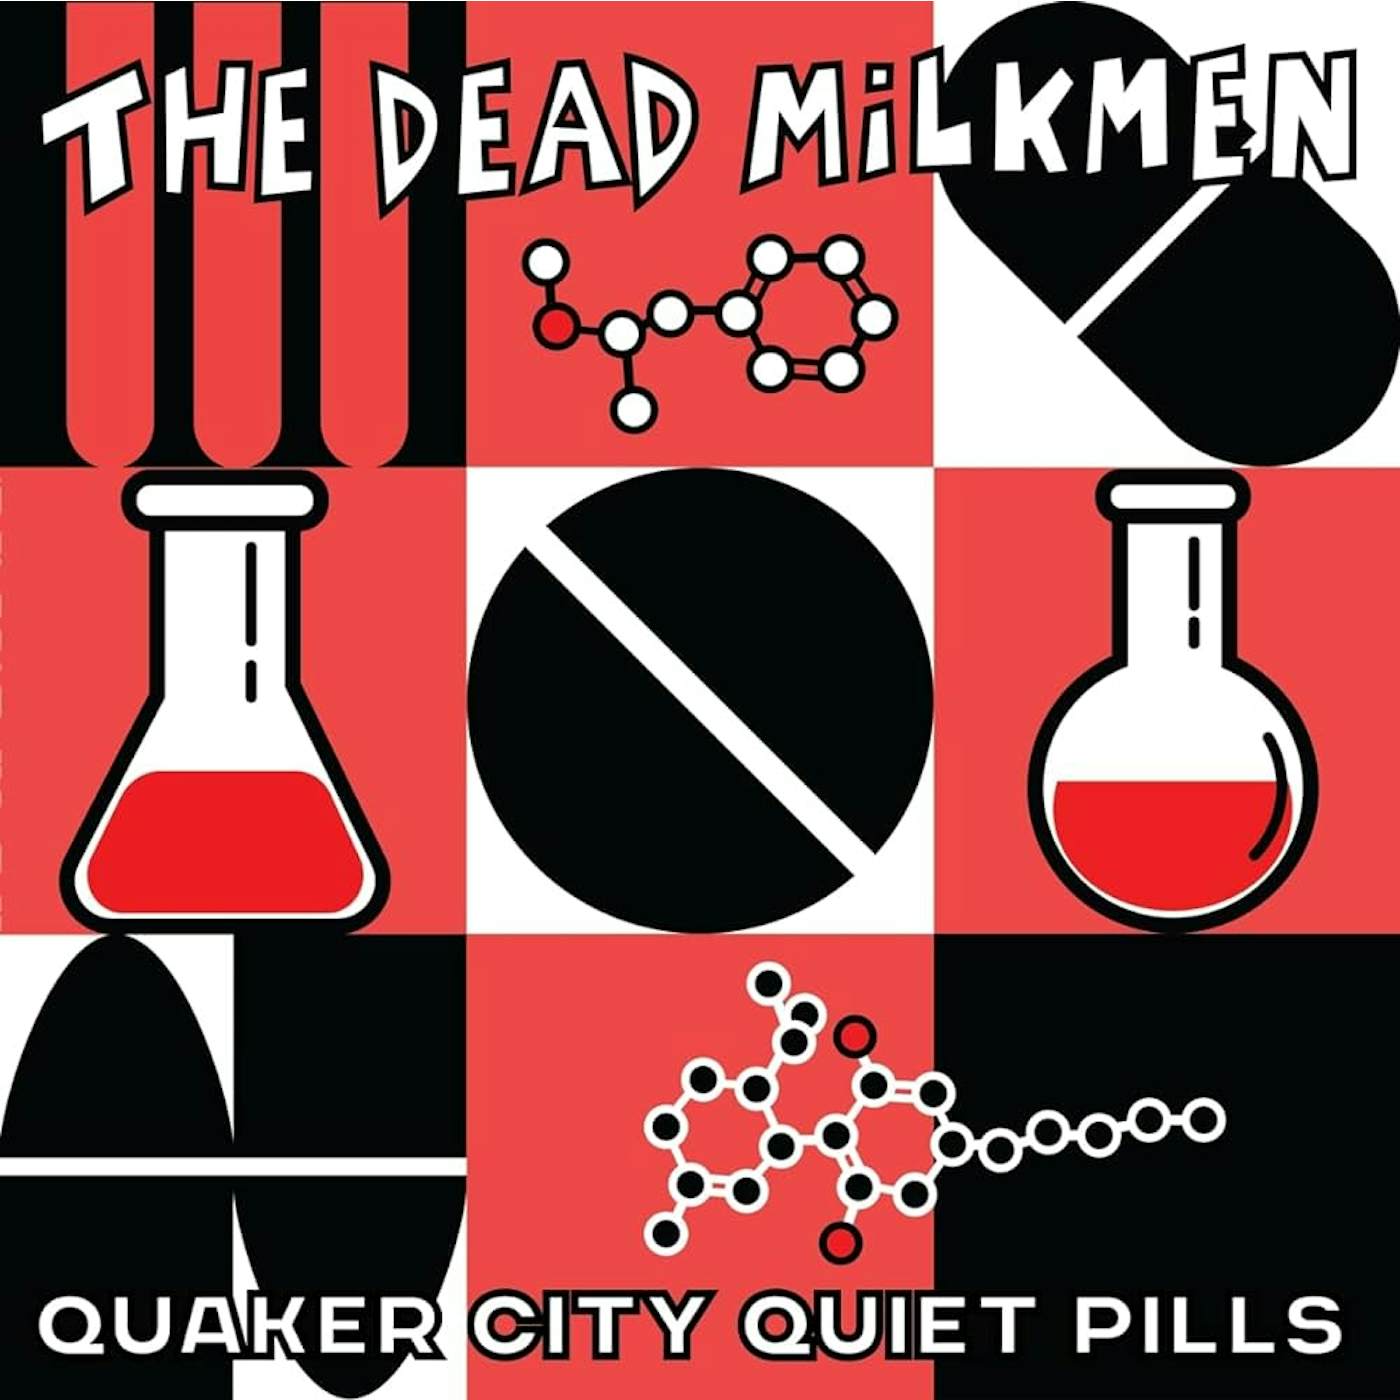 The Dead Milkmen Quaker City Quiet Pills (Flyers' Orange Vinyl Record